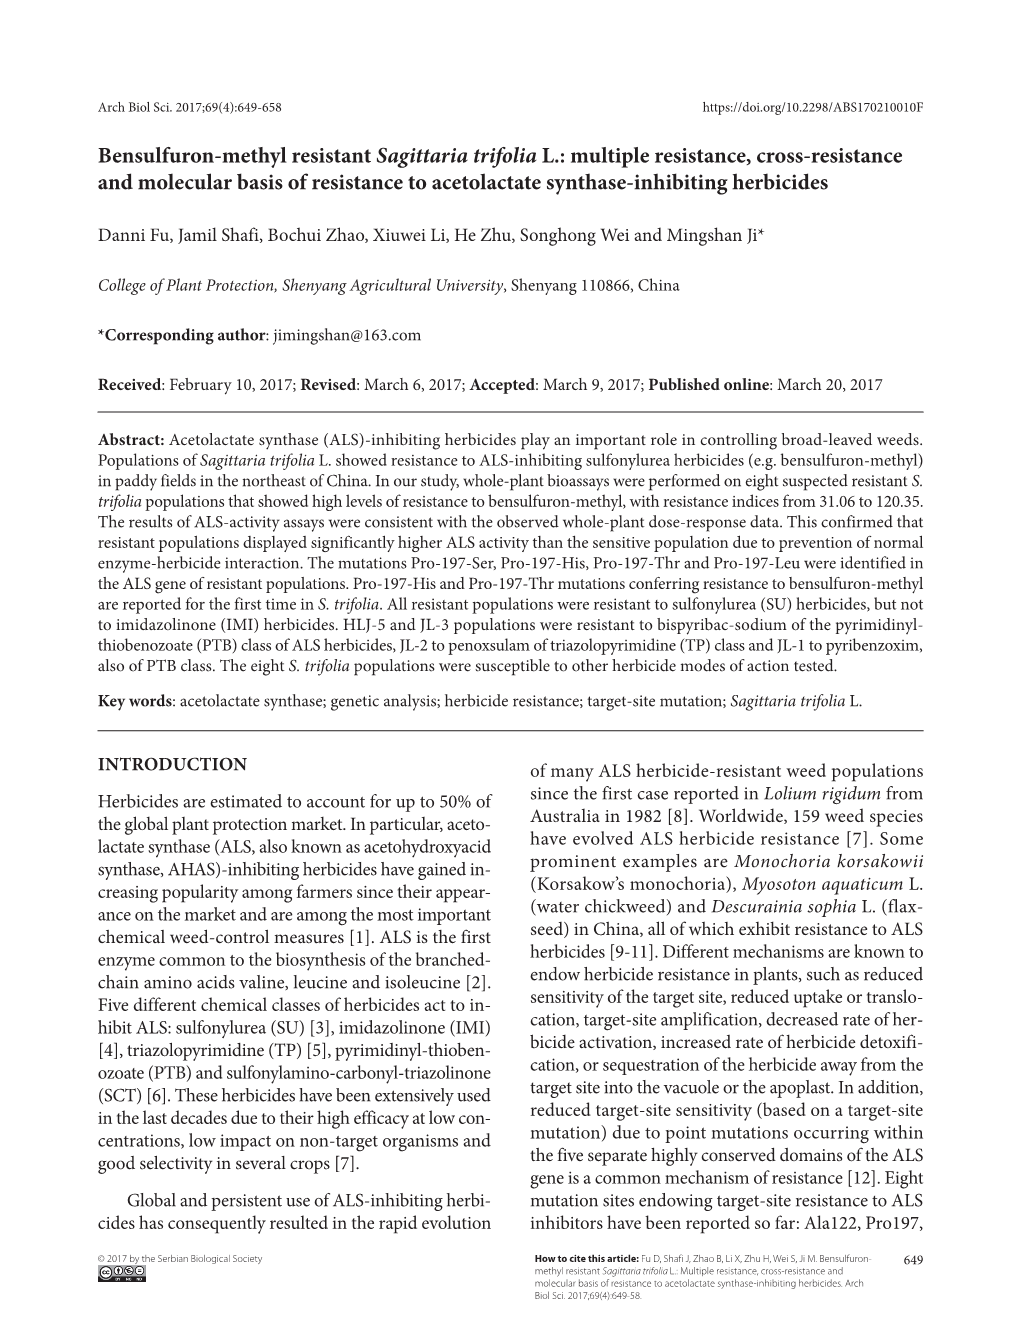 Bensulfuron-Methyl Resistant Sagittaria Trifolia L